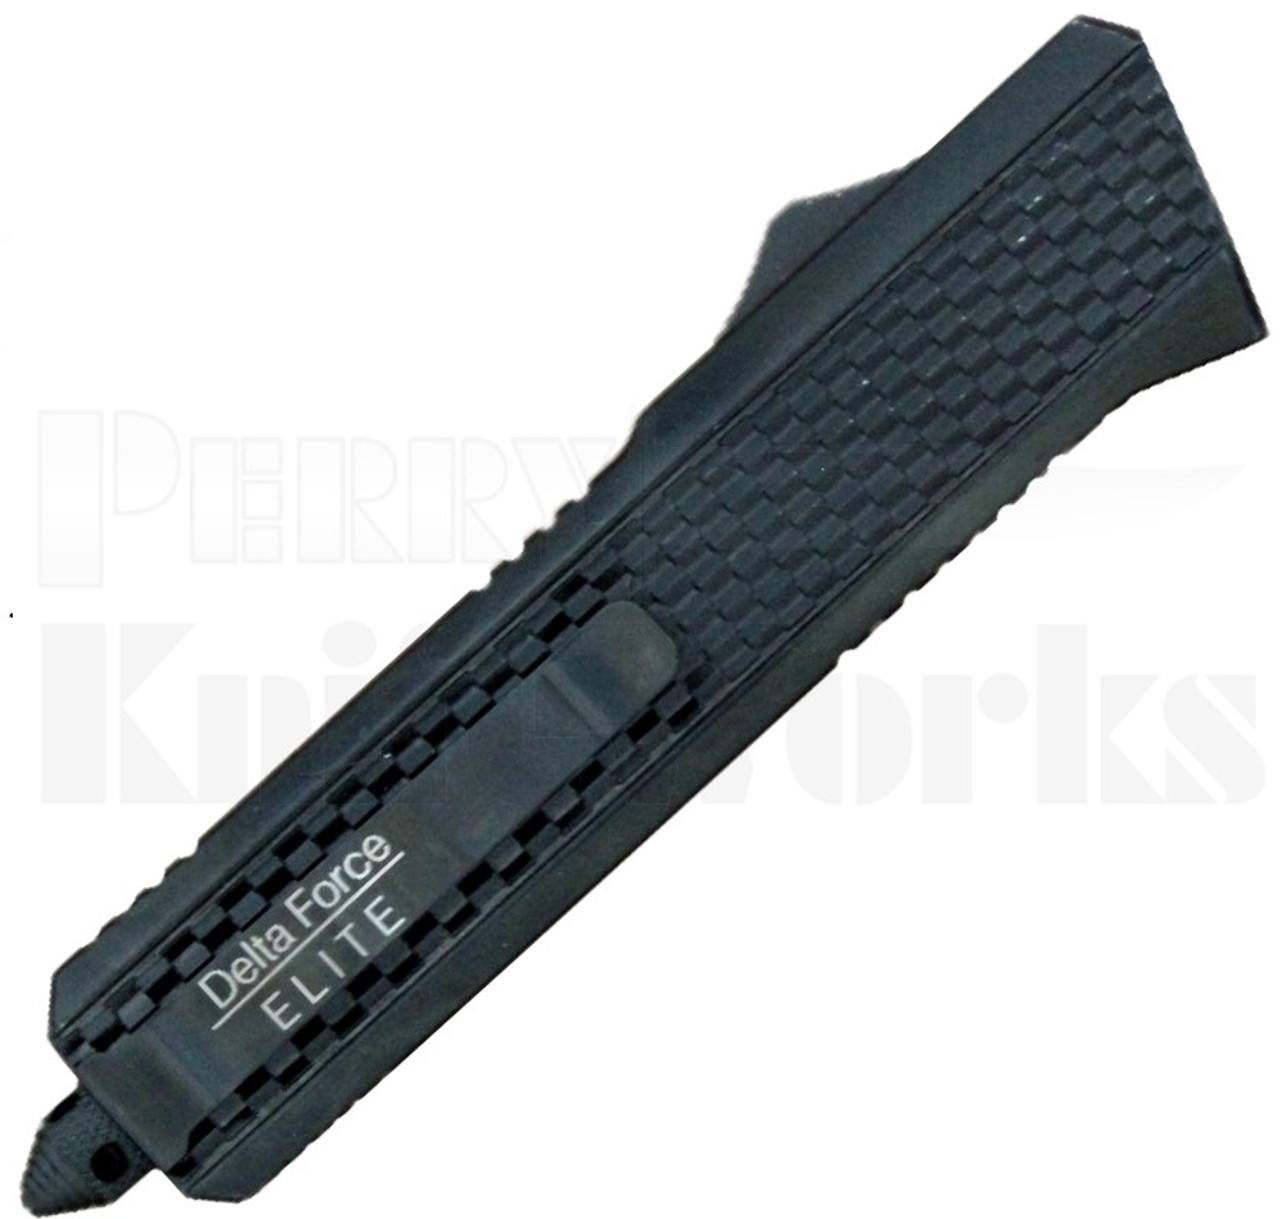 Delta Force Elite Model-B Automatic Knife Black l 3.2" Blade